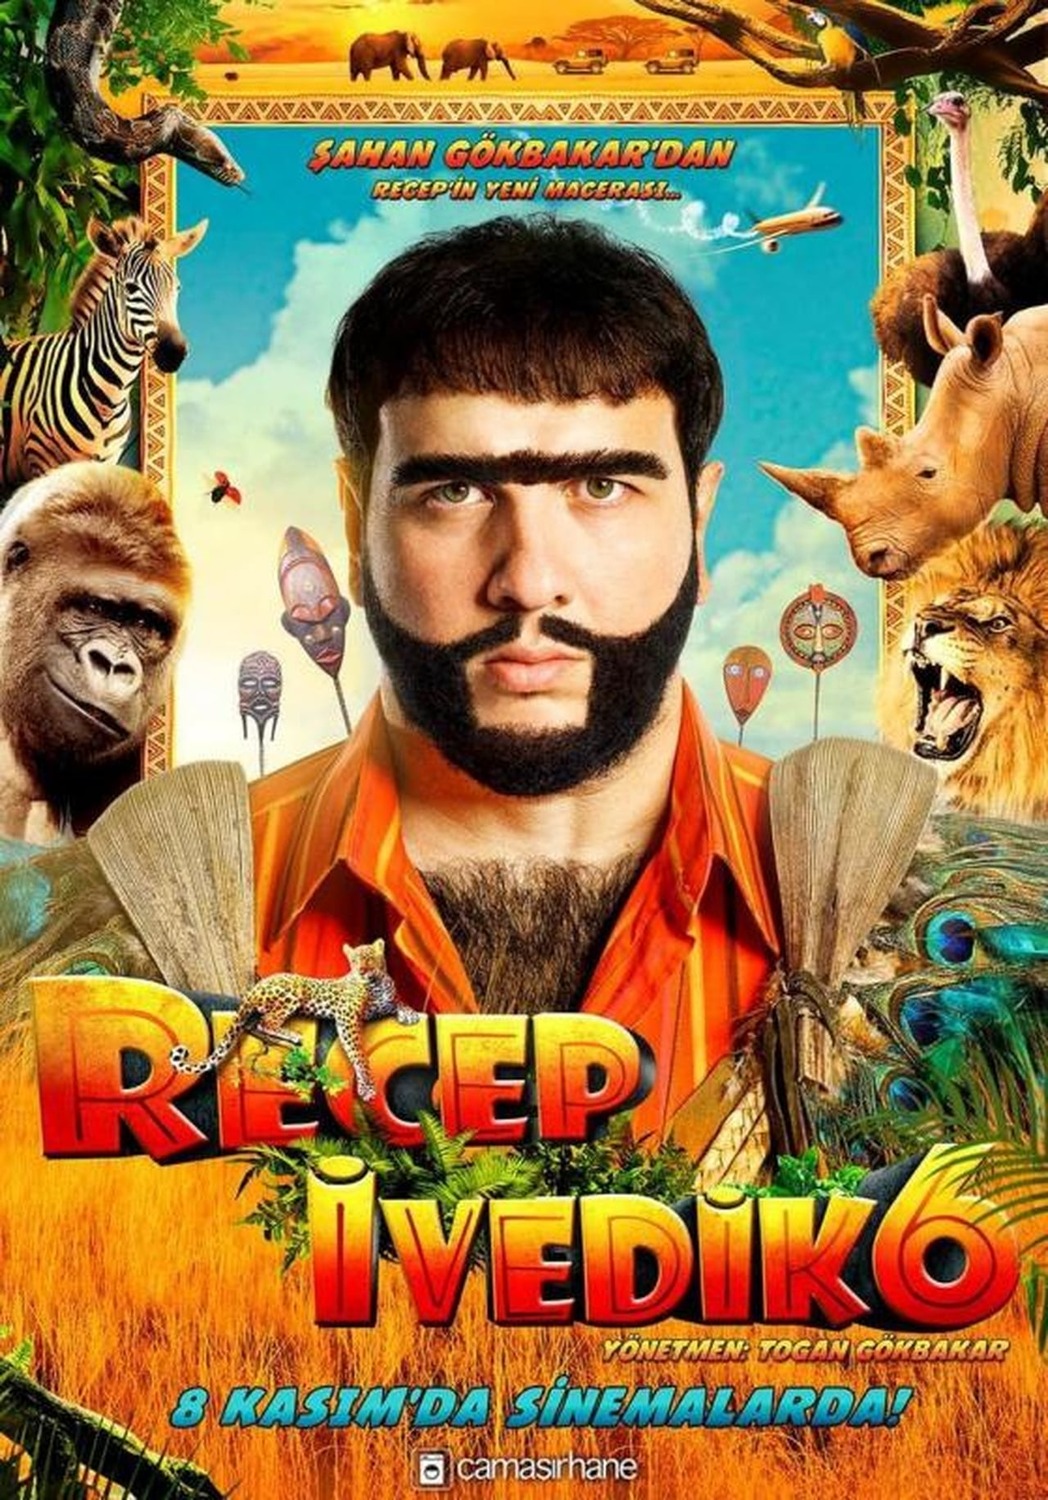 Extra Large Movie Poster Image for Recep Ivedik 6 